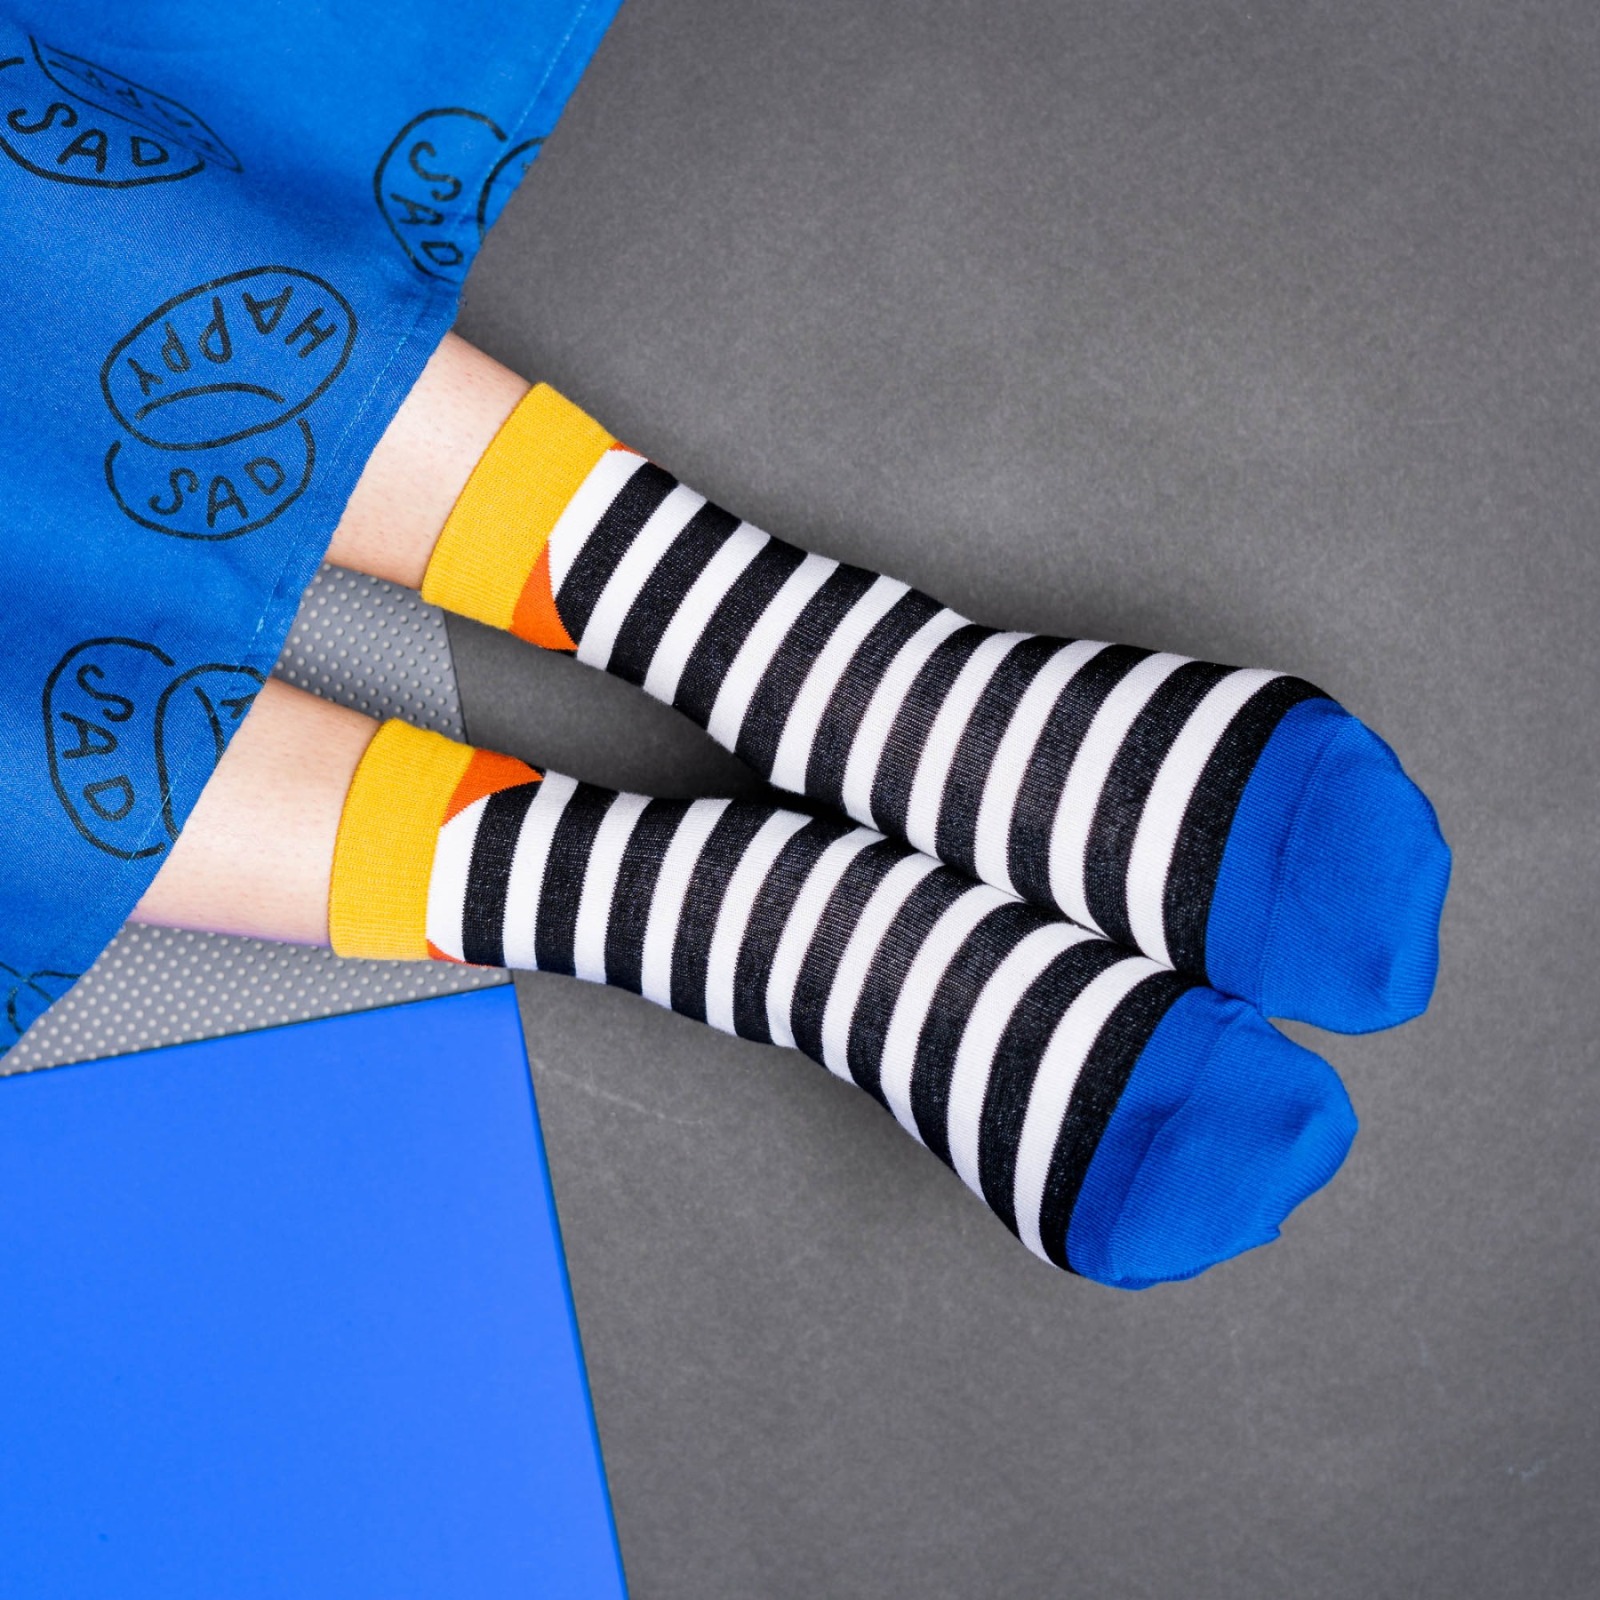 nicenicenice - nice socks block stripes red blue yellow 2